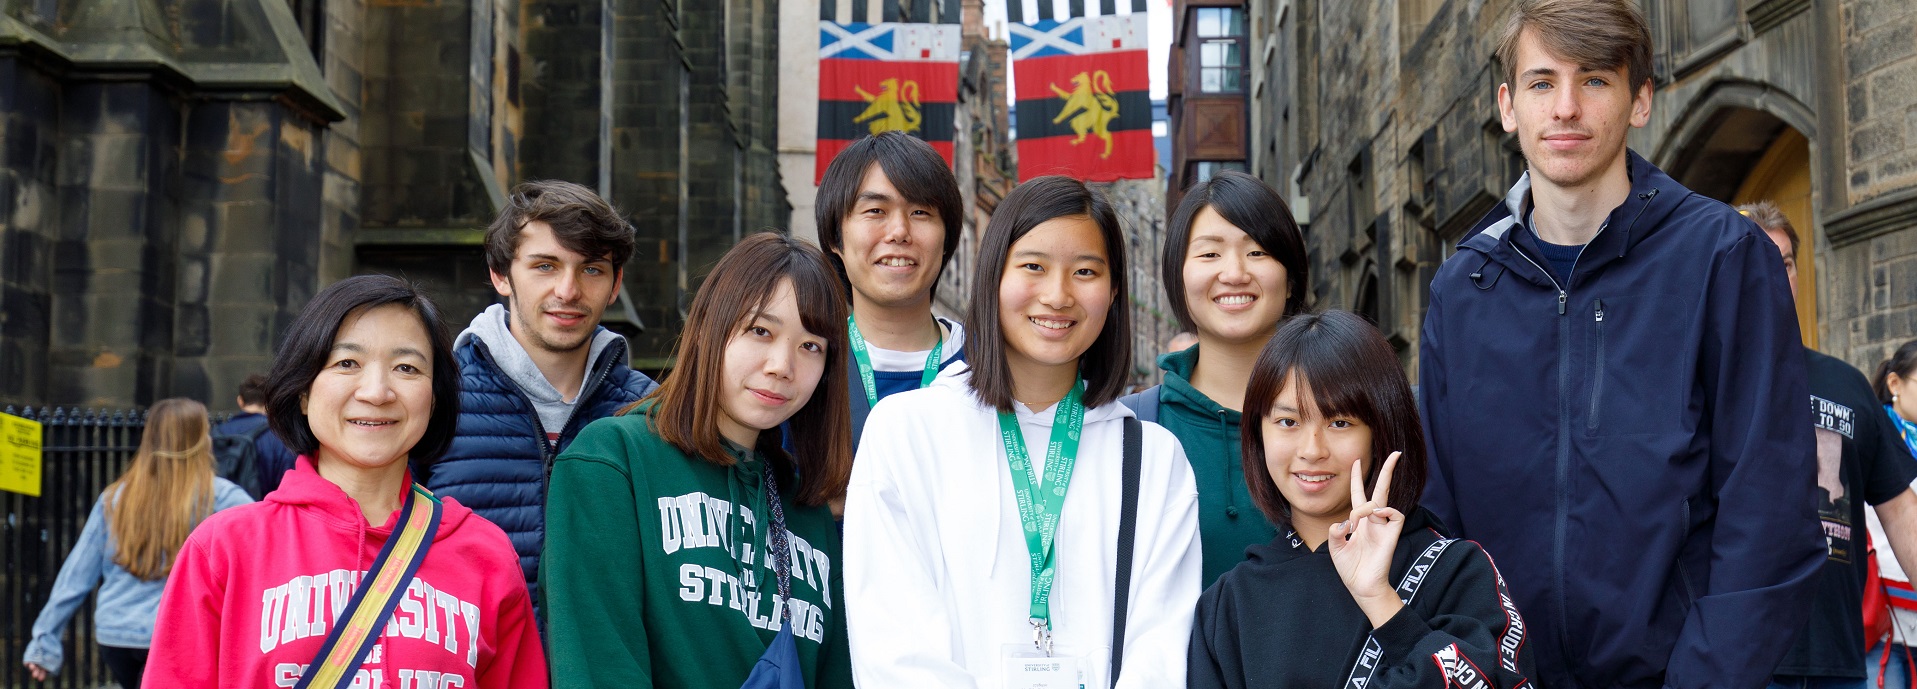 International English Language School students sightseeing in Edinburgh